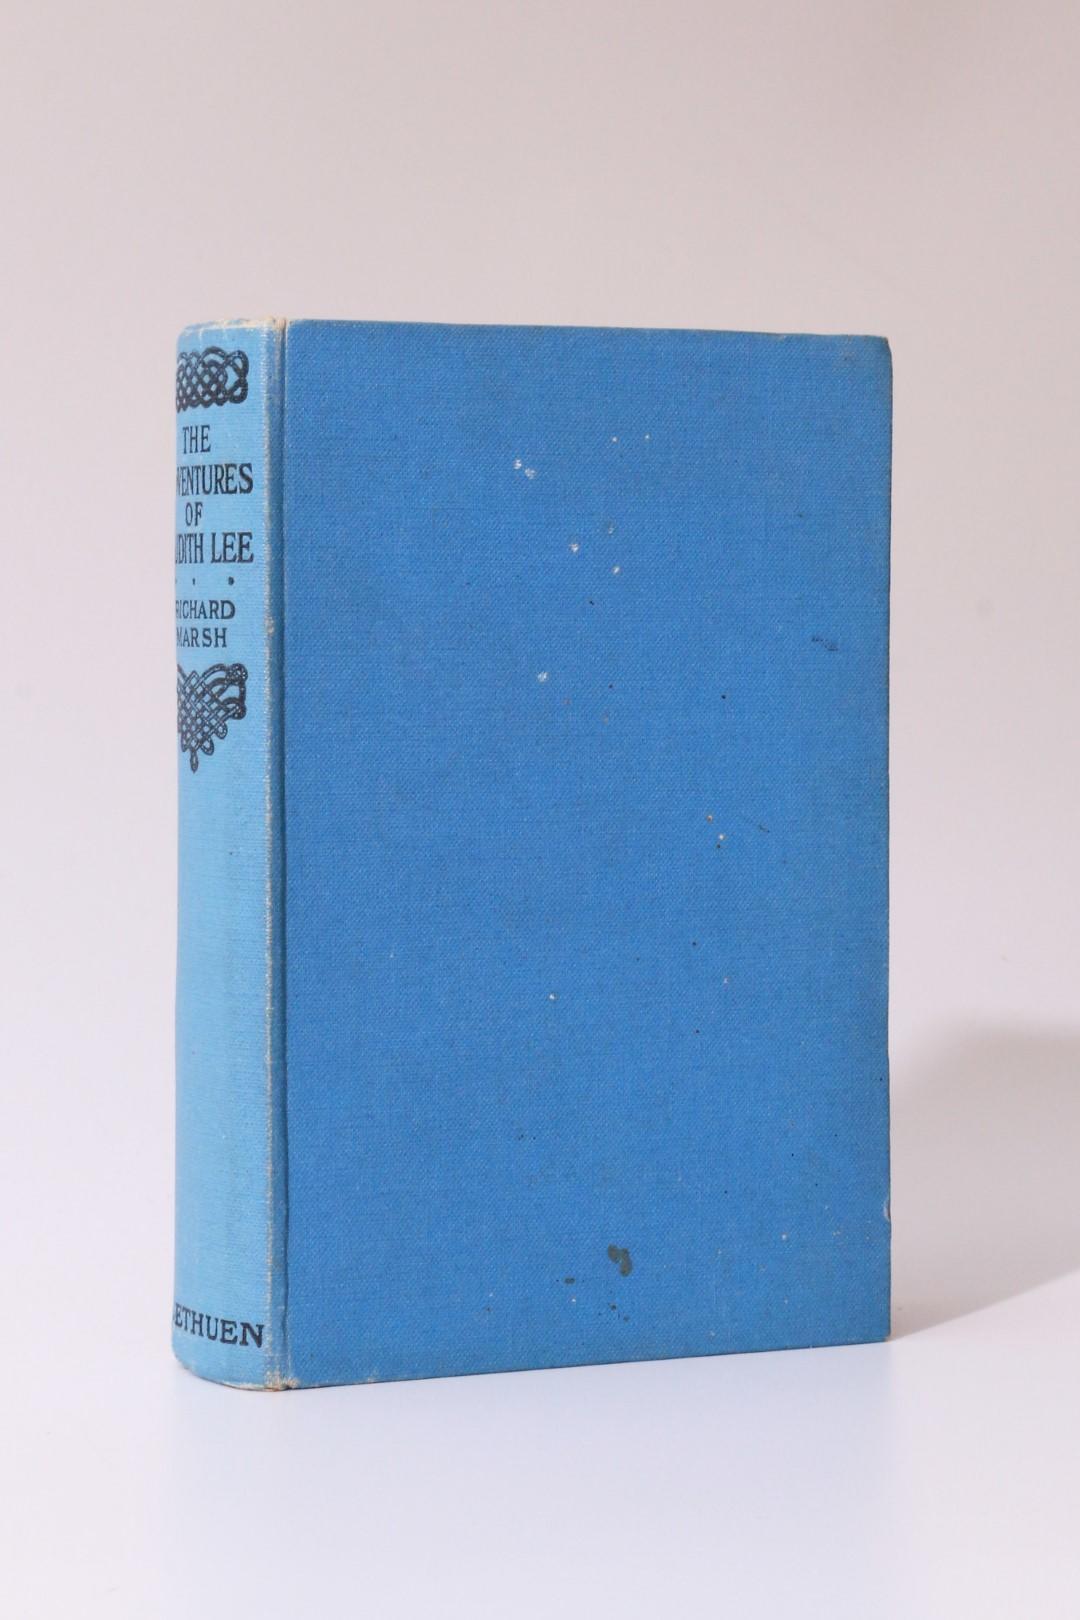 Richard Marsh - The Adventures of Judith Lee - Methuen, 1916, First Edition.